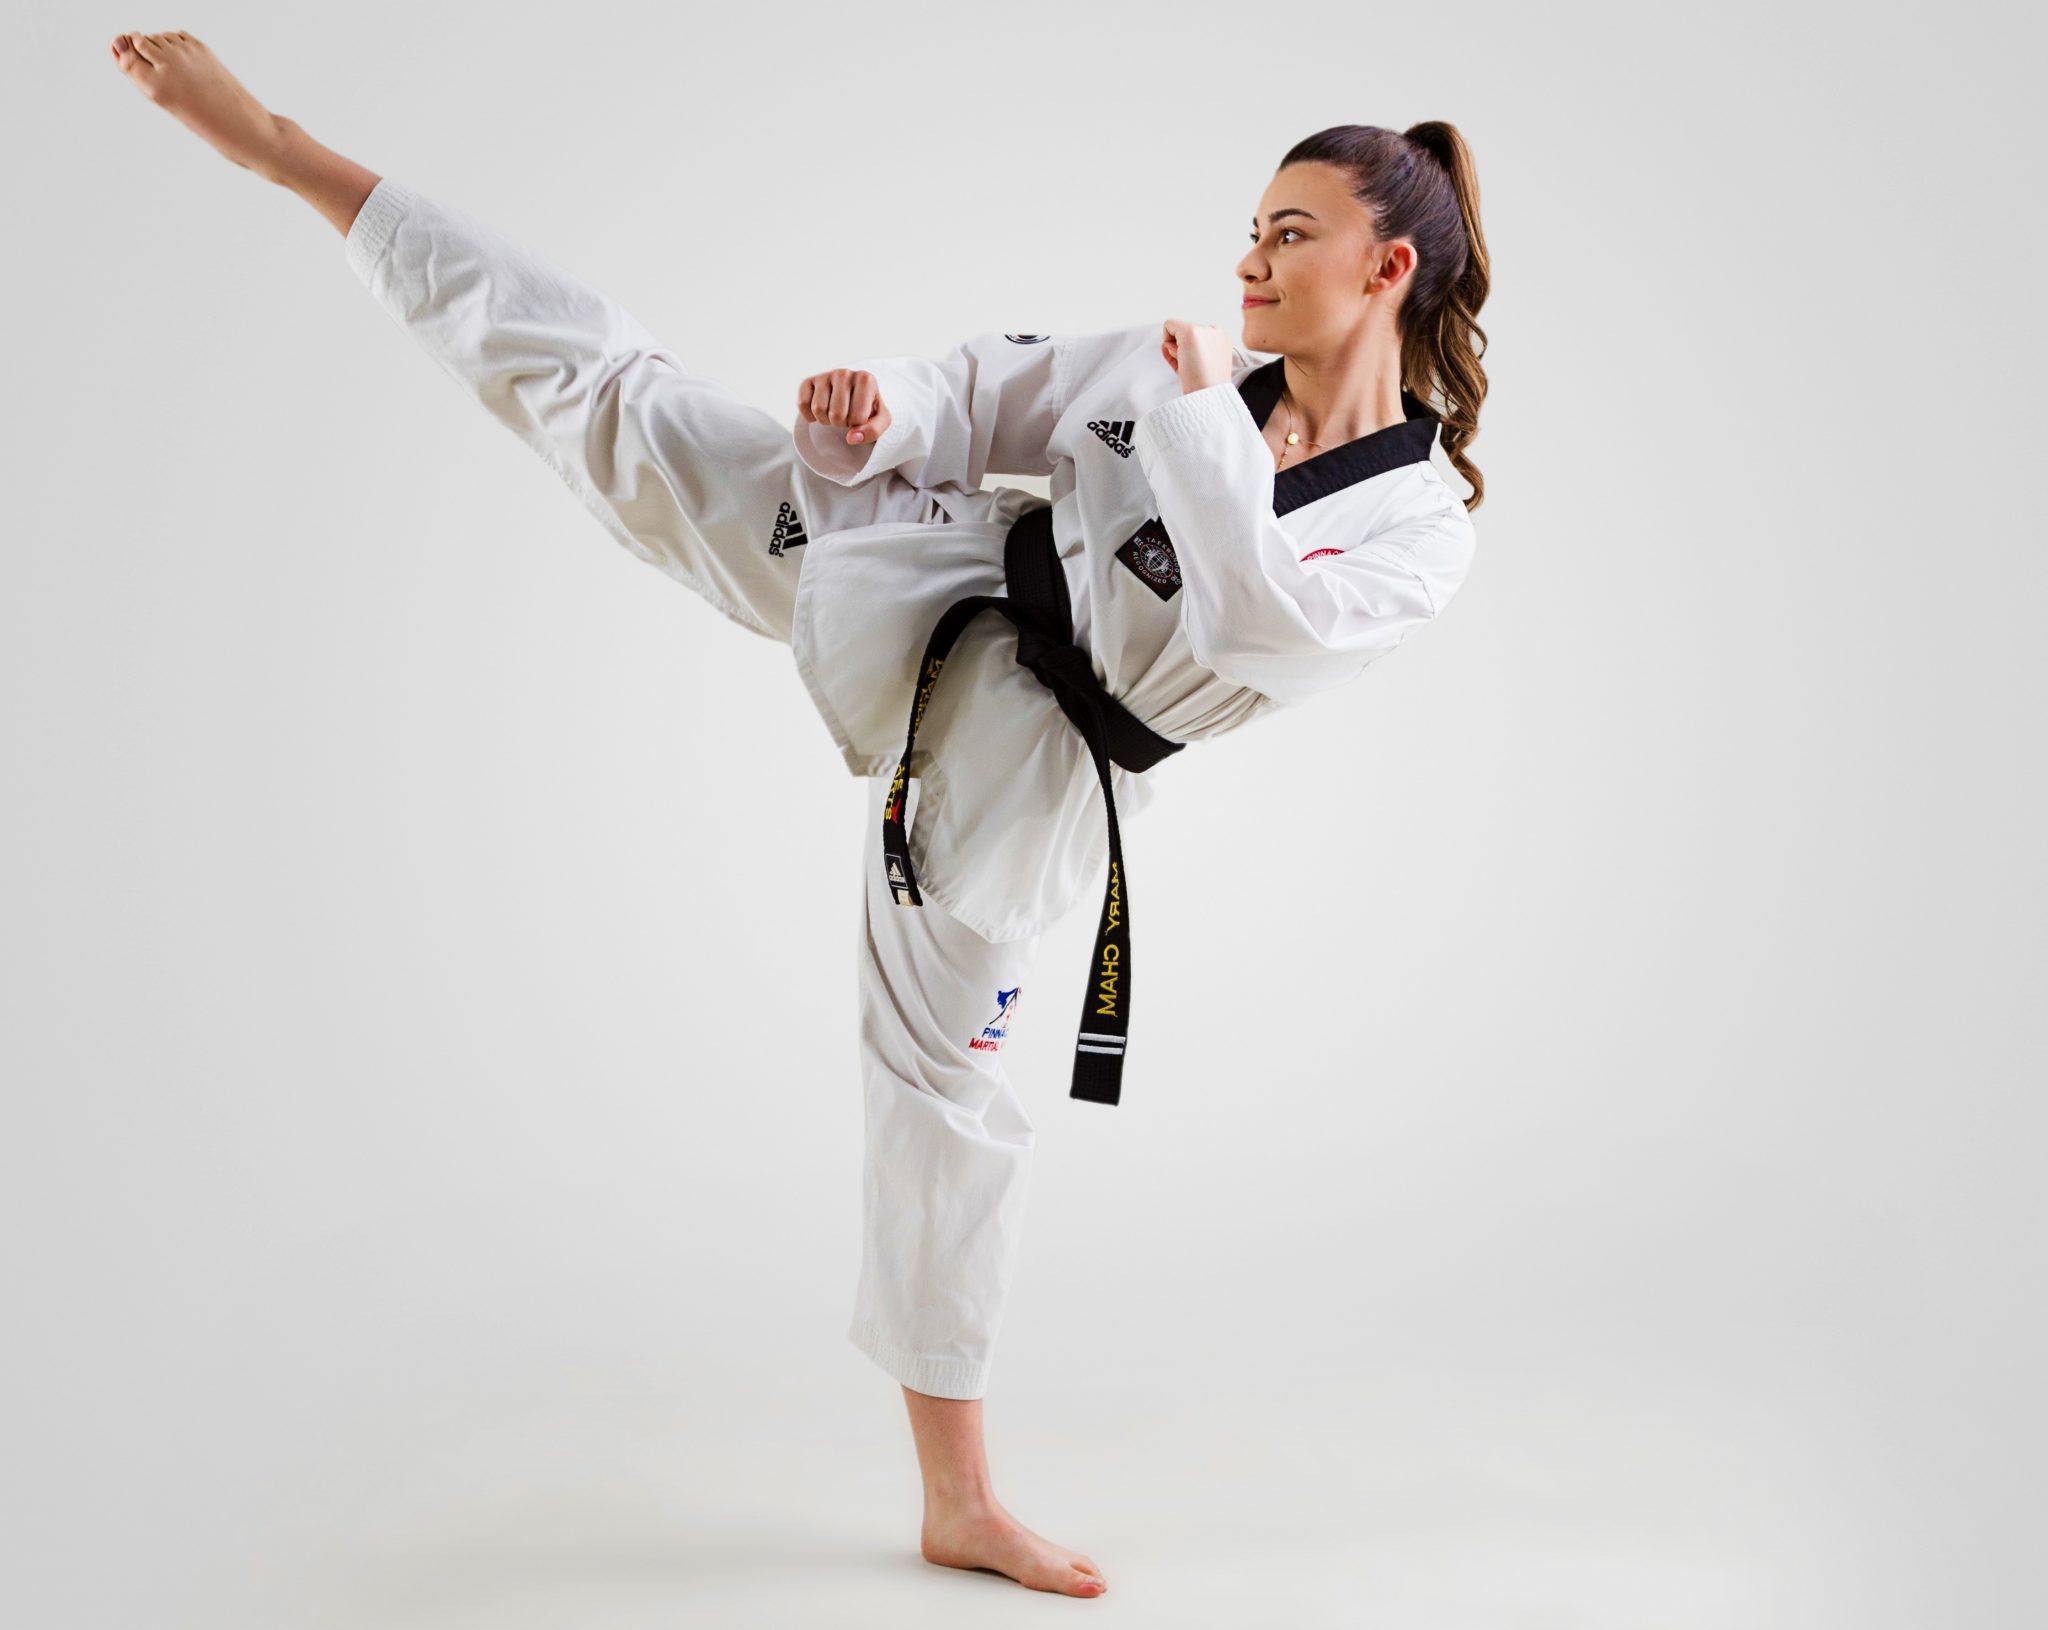 Is Pinnacle Martial Arts Near Me? | Pinnacle Martial Arts classes in Sydney